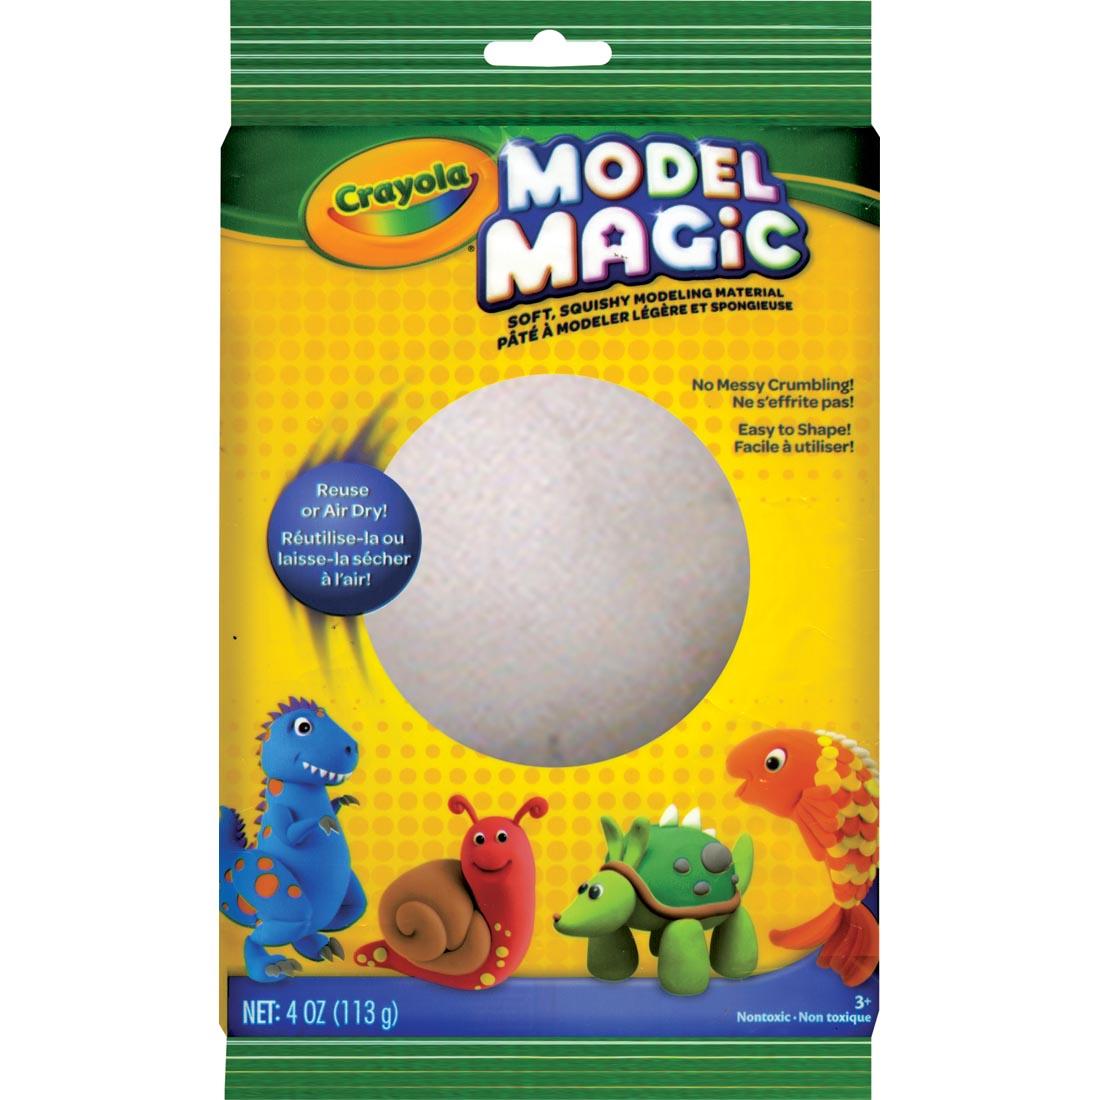 Package of White Crayola Model Magic